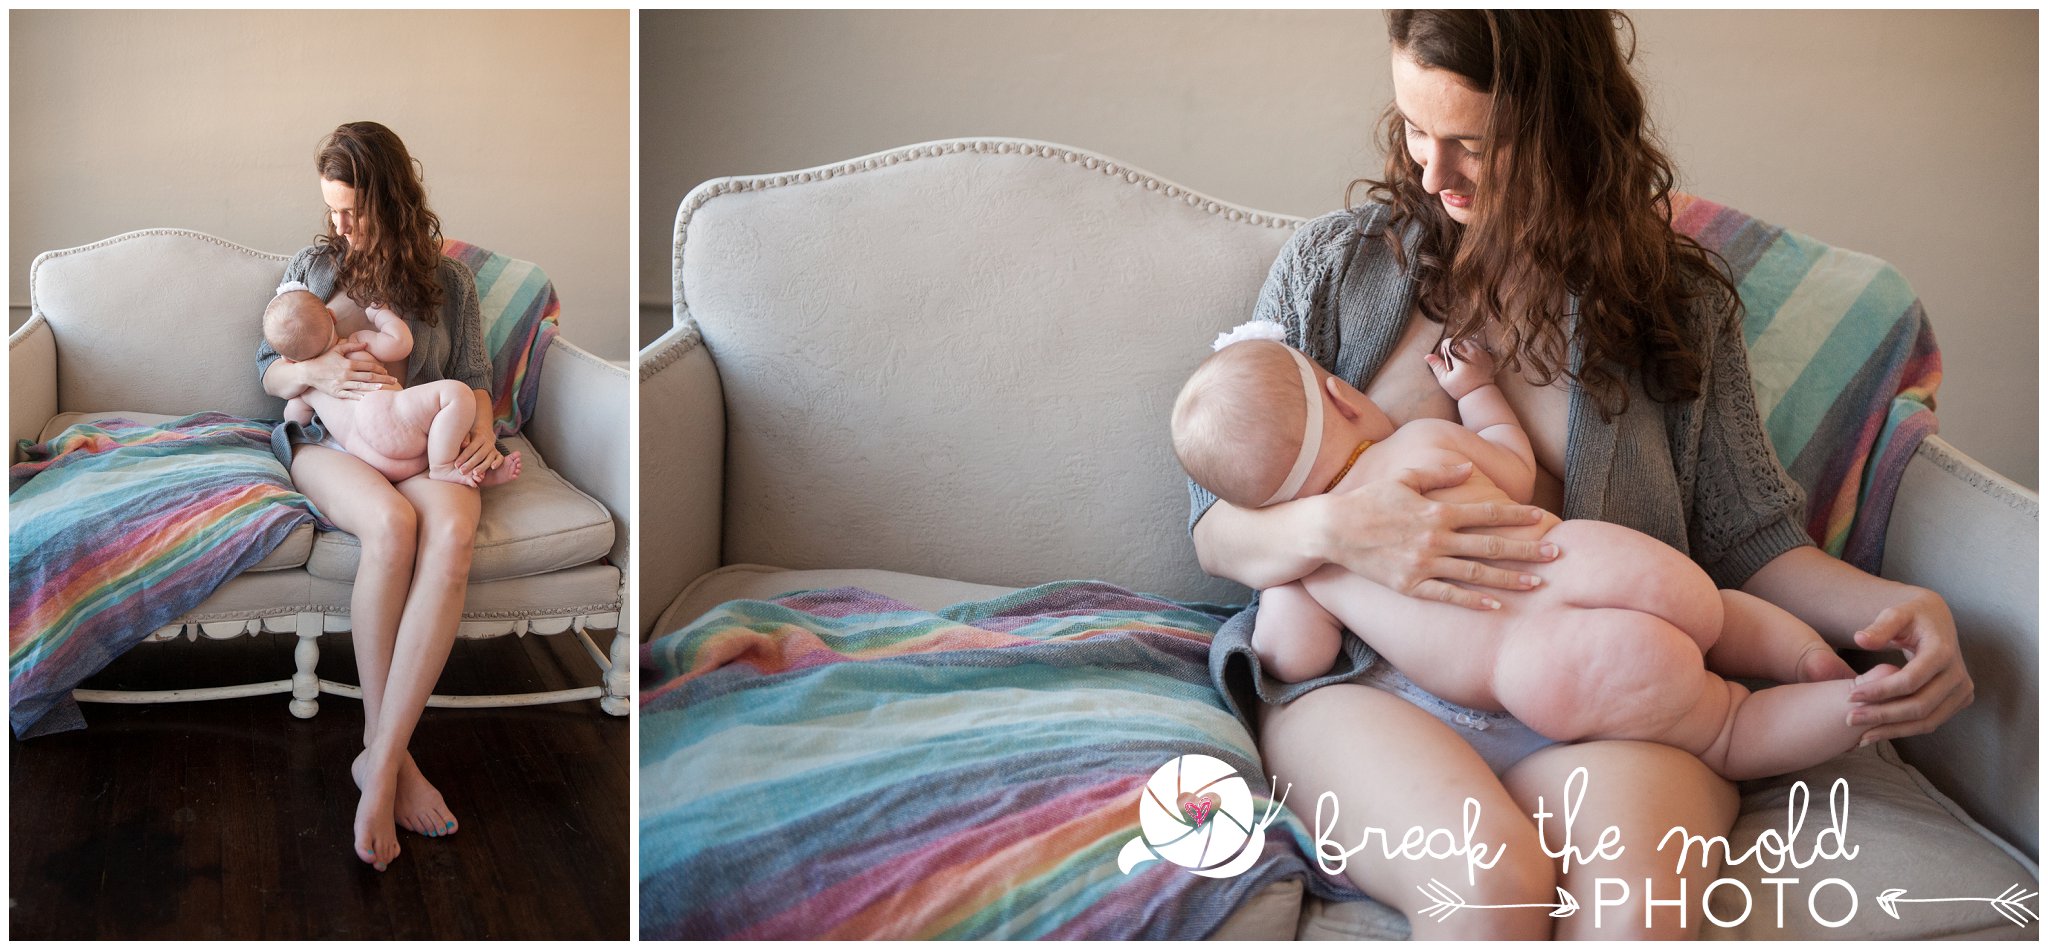 break-the-mold-photo-nursing-body-love-baby-pregnant-women-powerful-breastfeeding-sessions_7233.jpg